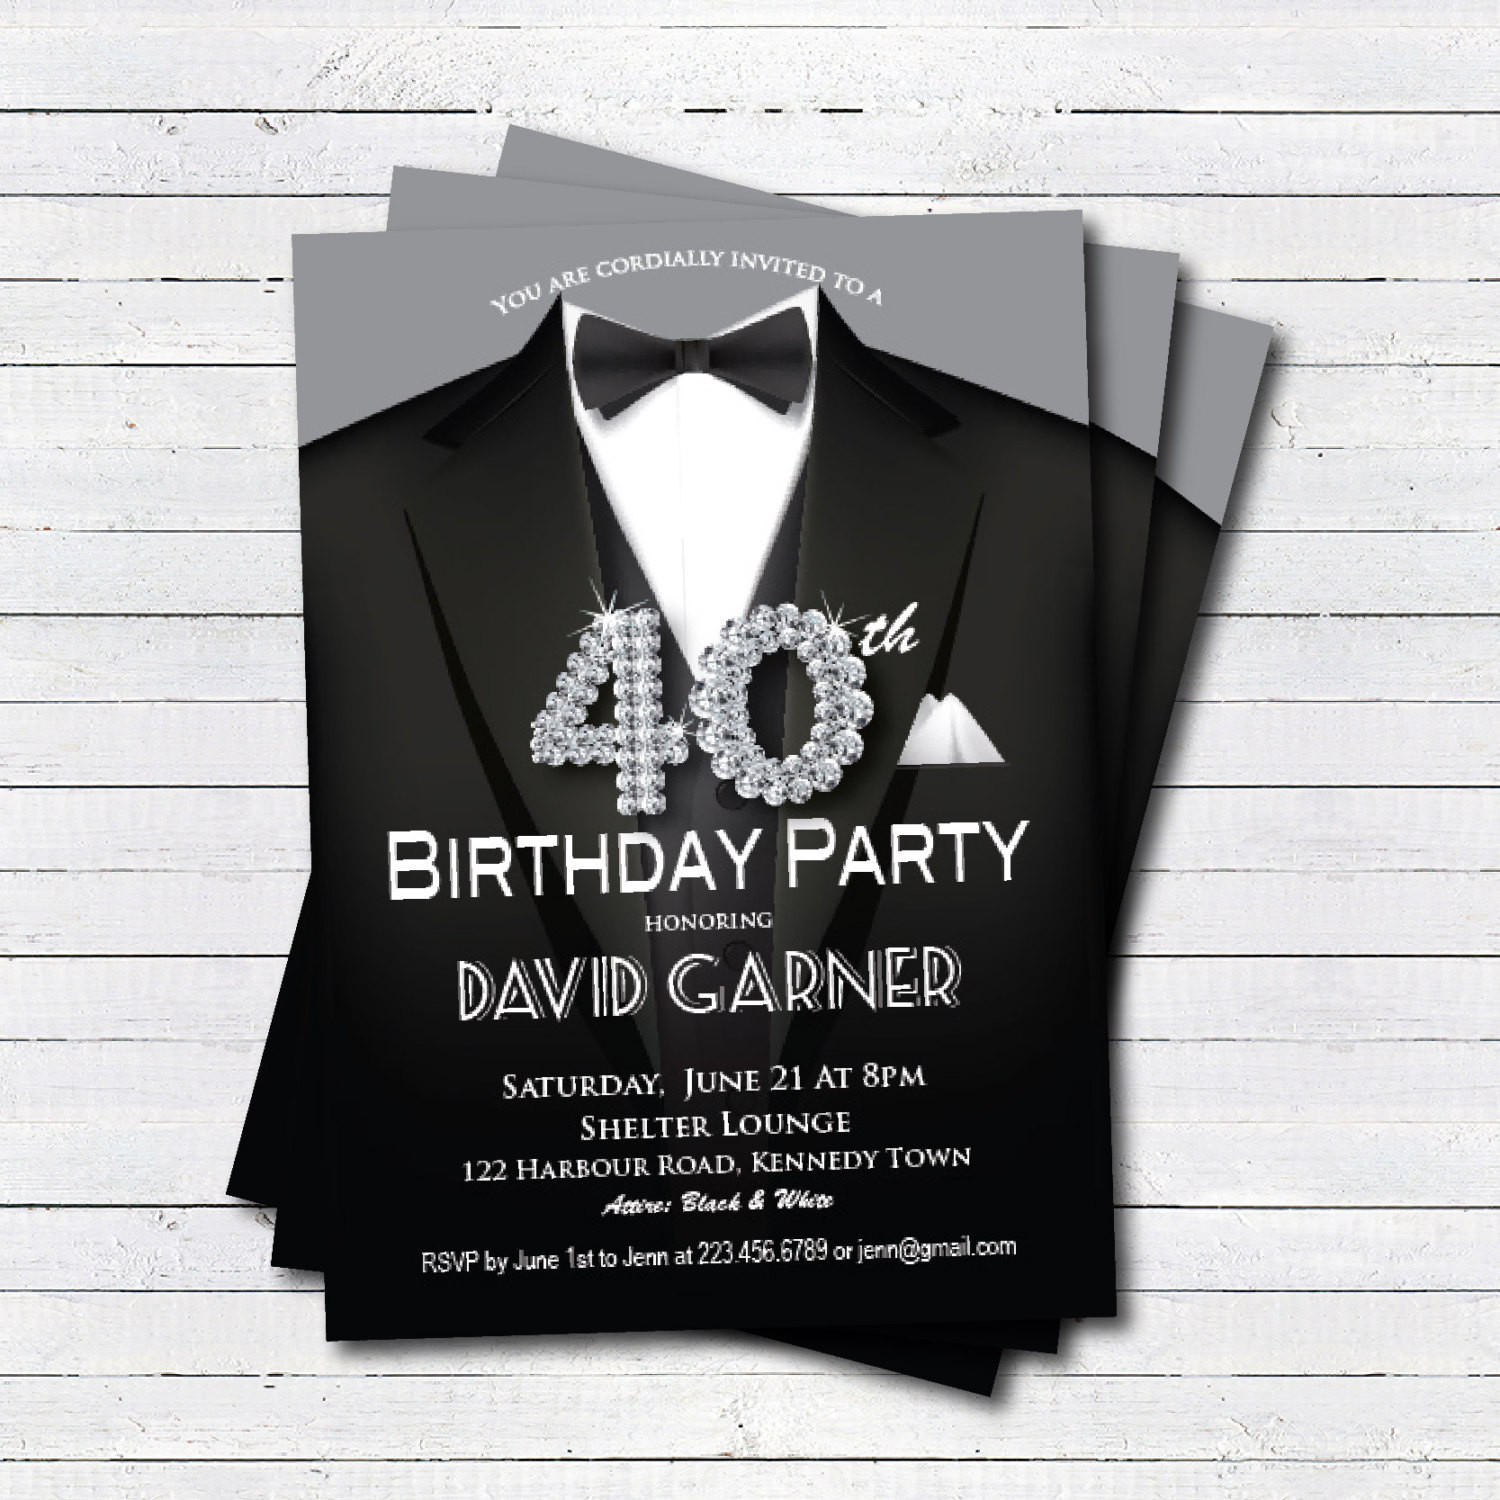 40th Birthday Invitations For Men
 40th birthday invitation man Black tie and suit diamond